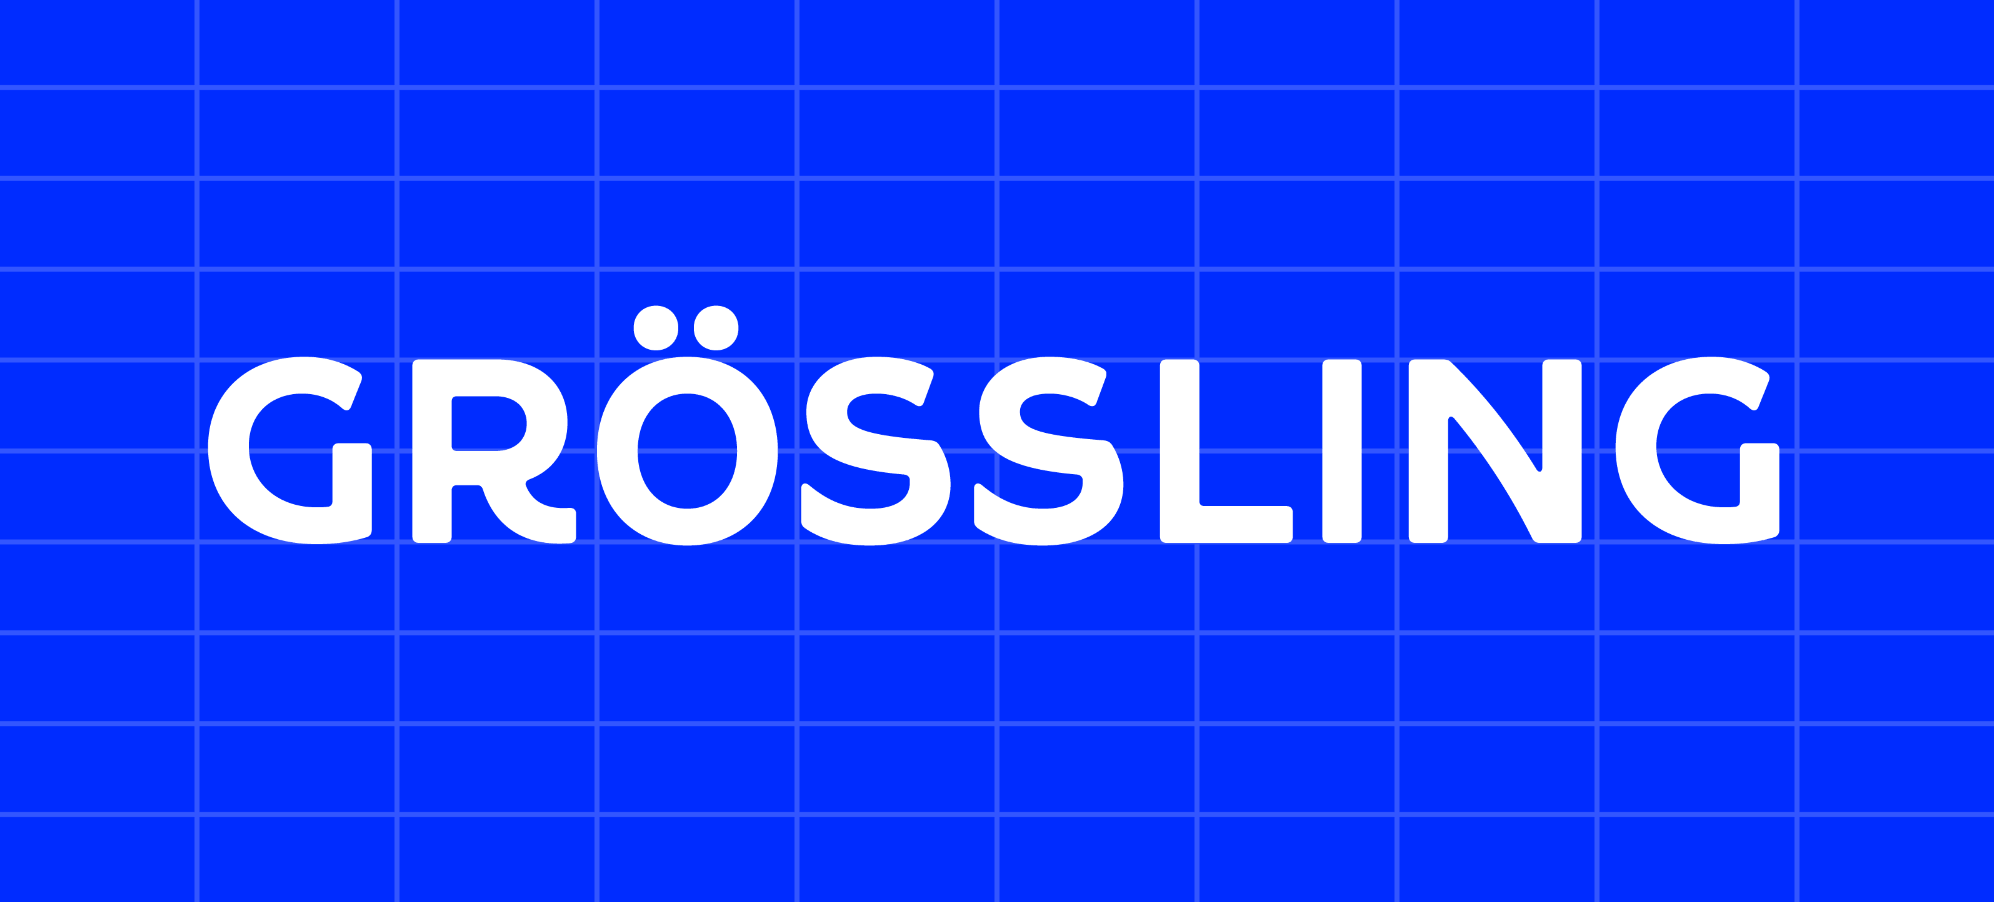 Custom Fonts: Grössling